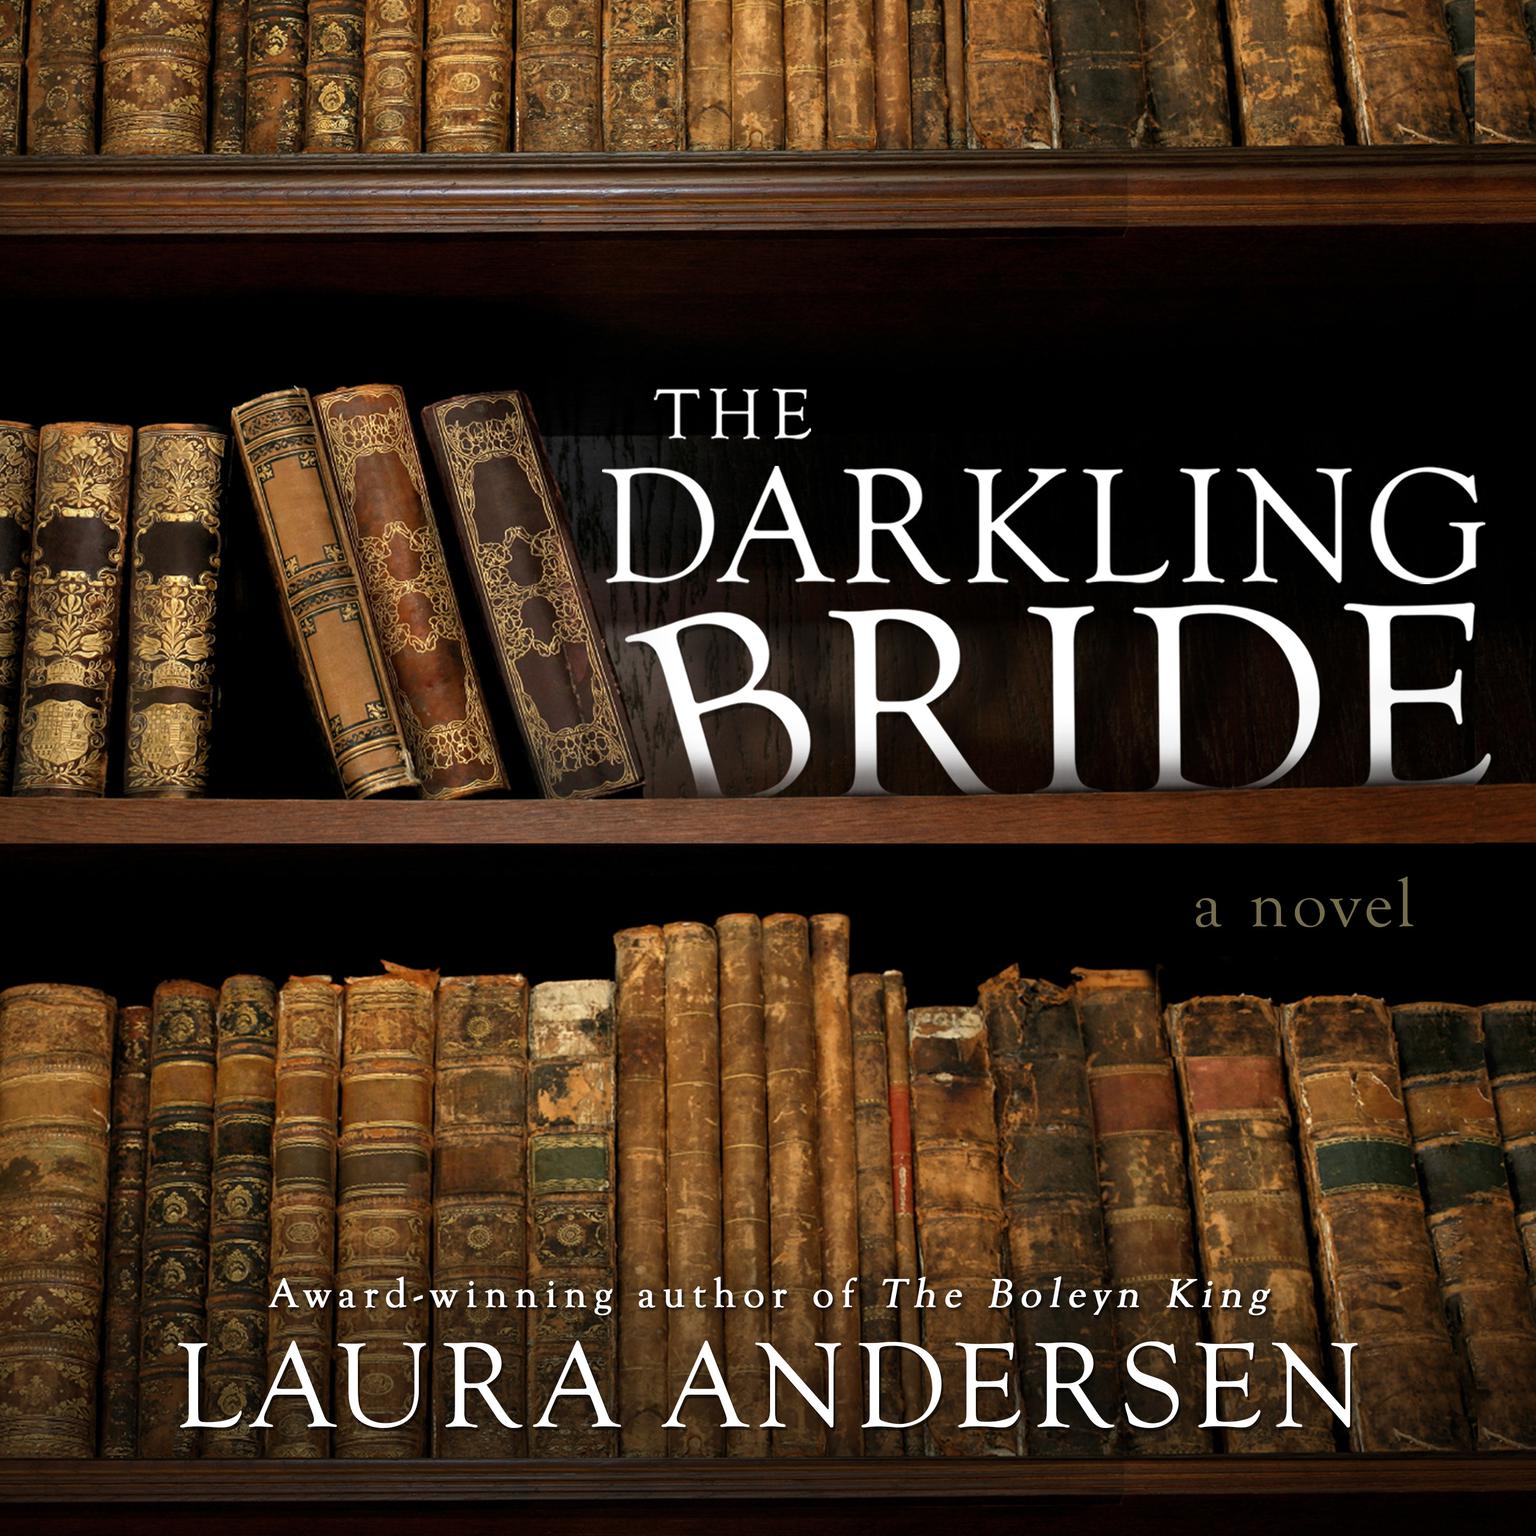 The Darkling Bride: A Novel Audiobook, by Laura Andersen